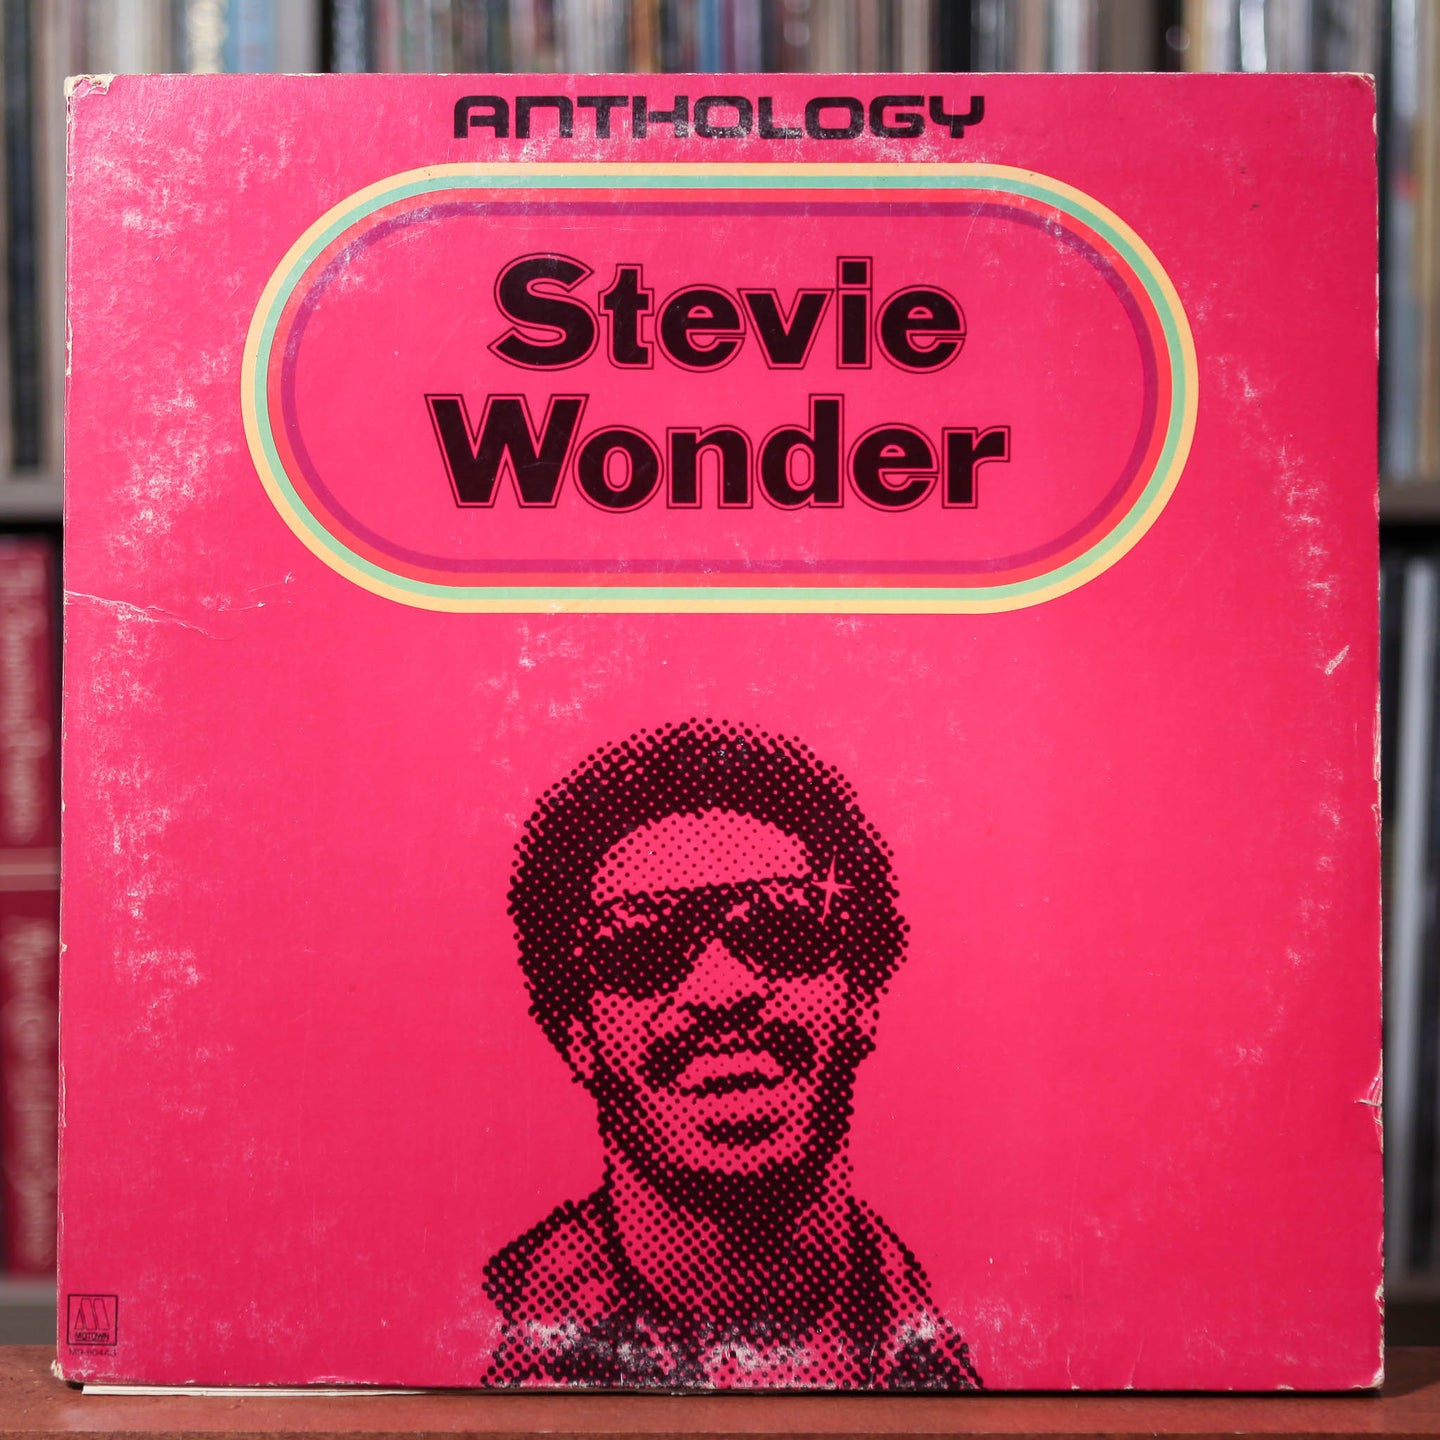 Stevie Wonder - Anthology - 3LP - 1977 Motown, VG/VG